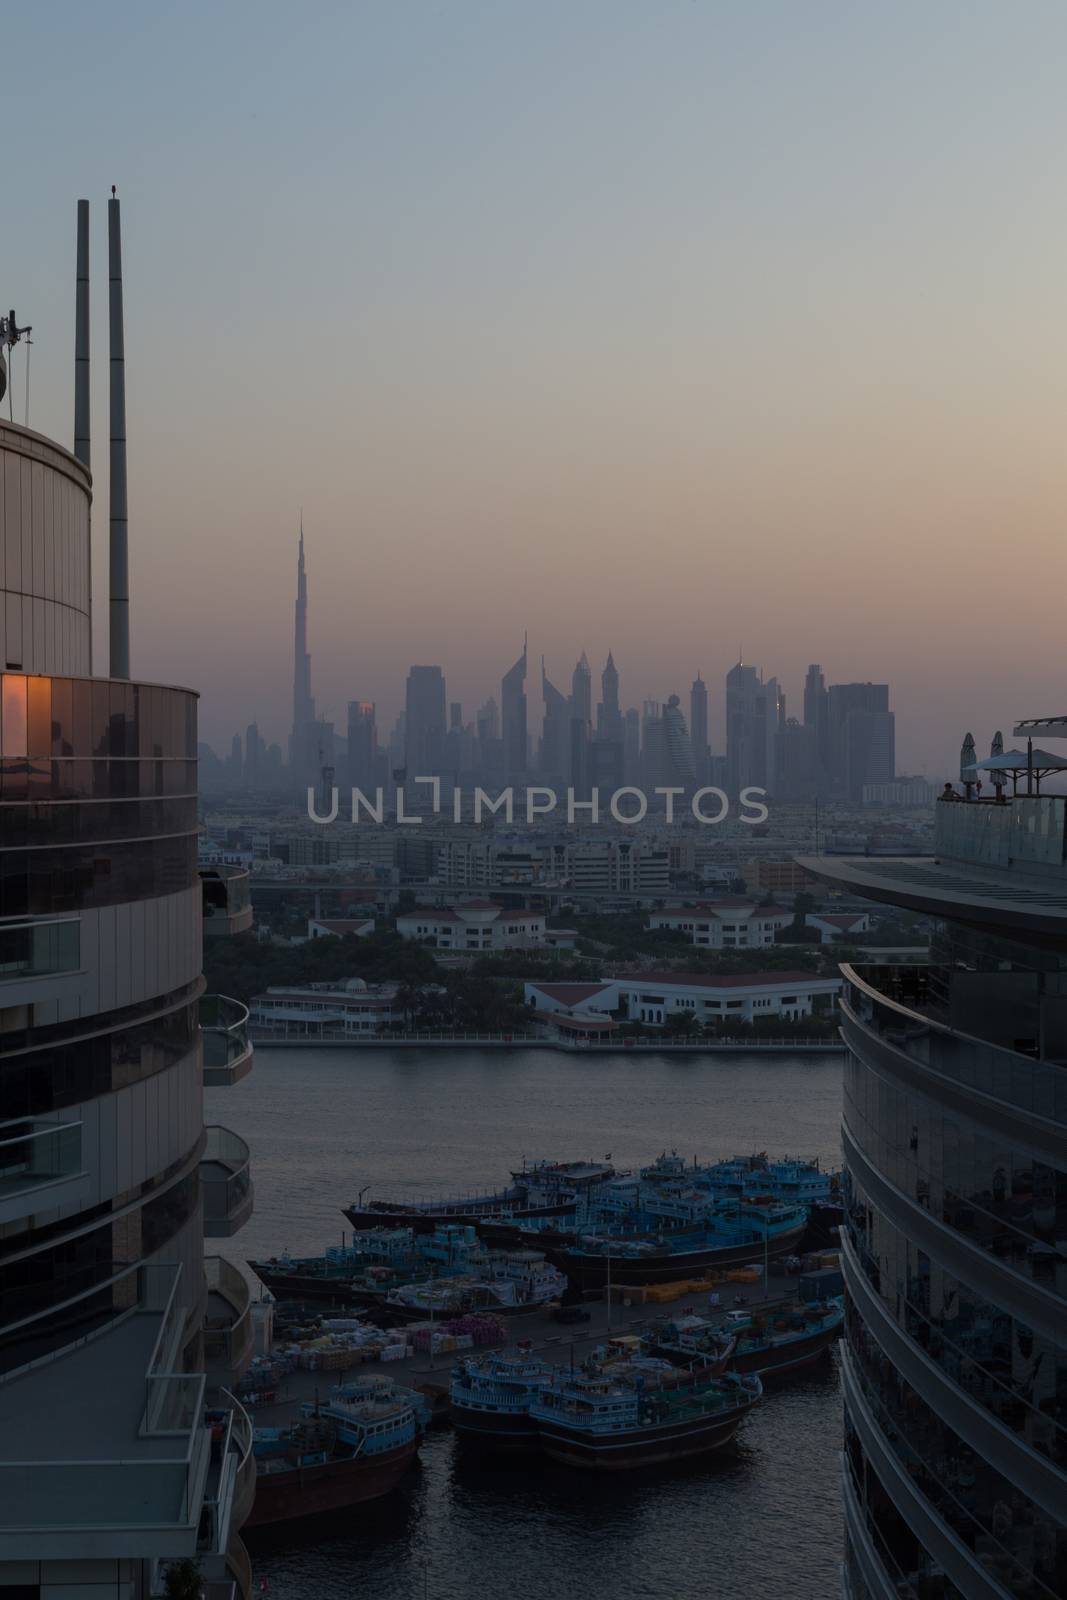 Dubai, United Arab Emirates - October 17, 2014: Photograph of the city skyline